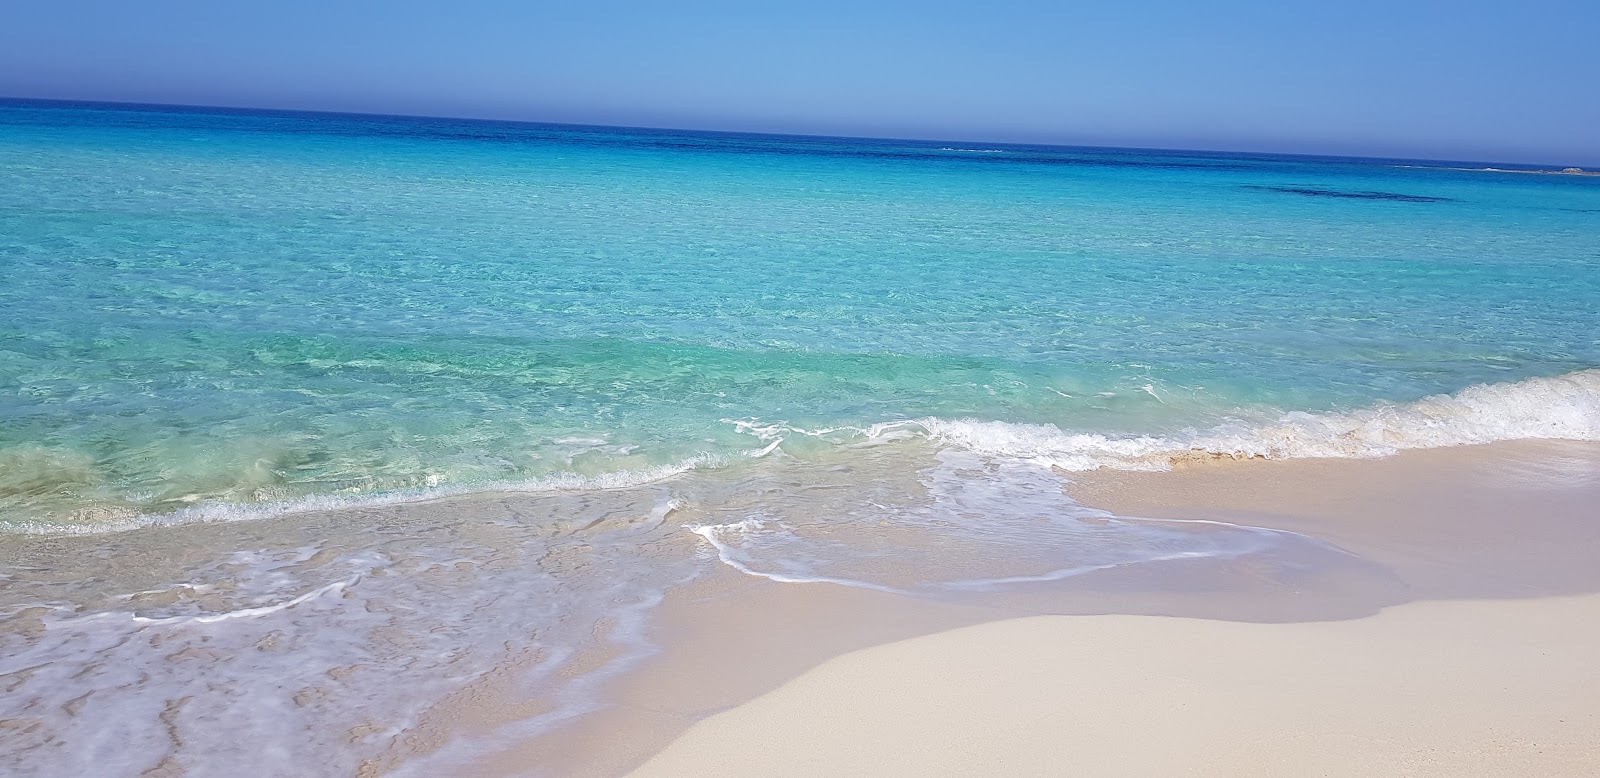 Fotografie cu Marsa Baghush Beach - locul popular printre cunoscătorii de relaxare